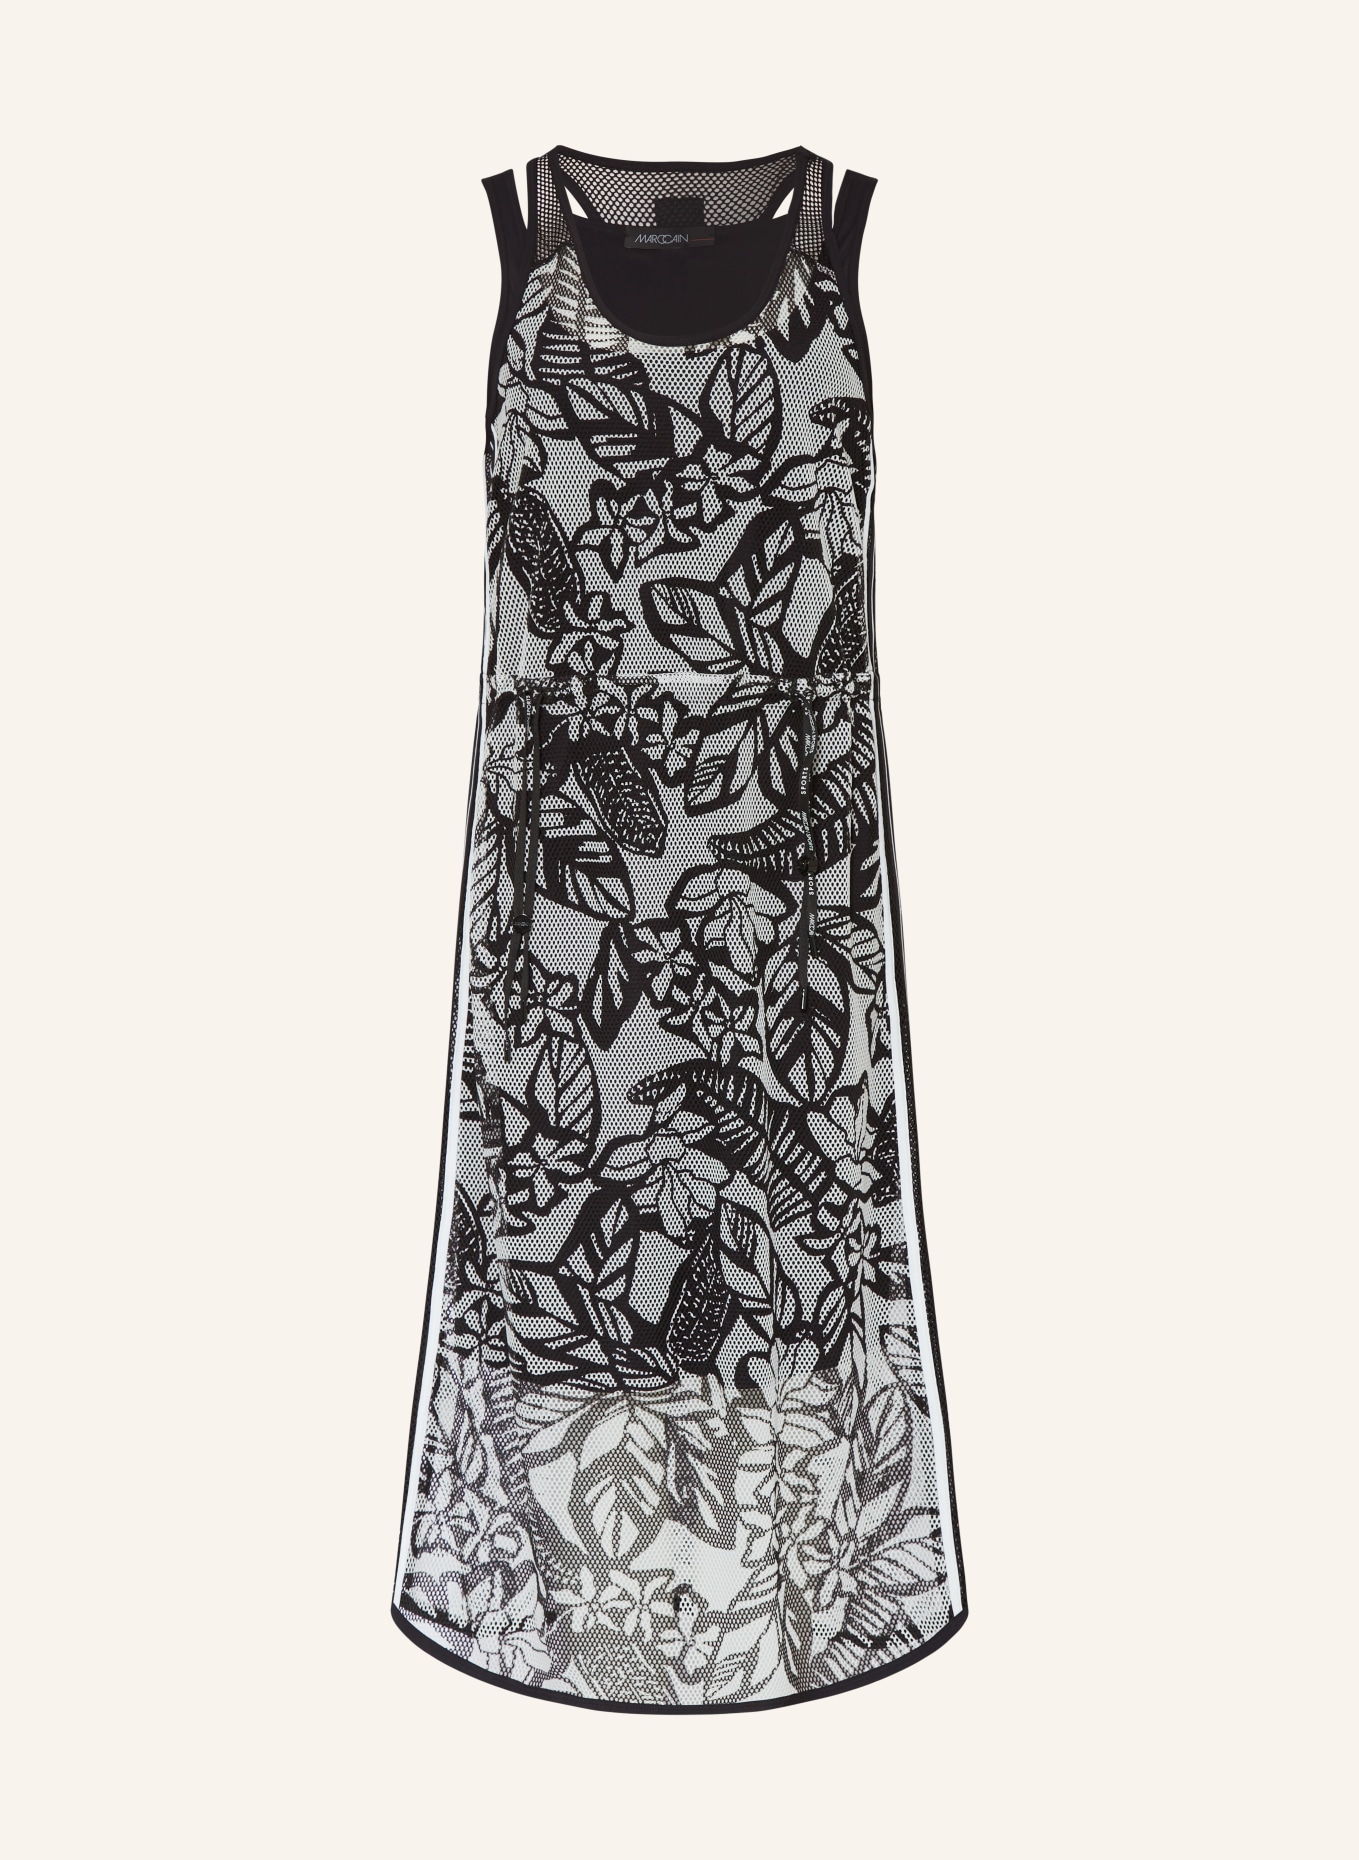 MARC CAIN Mesh-Kleid, Farbe: 910 black and white (Bild 1)